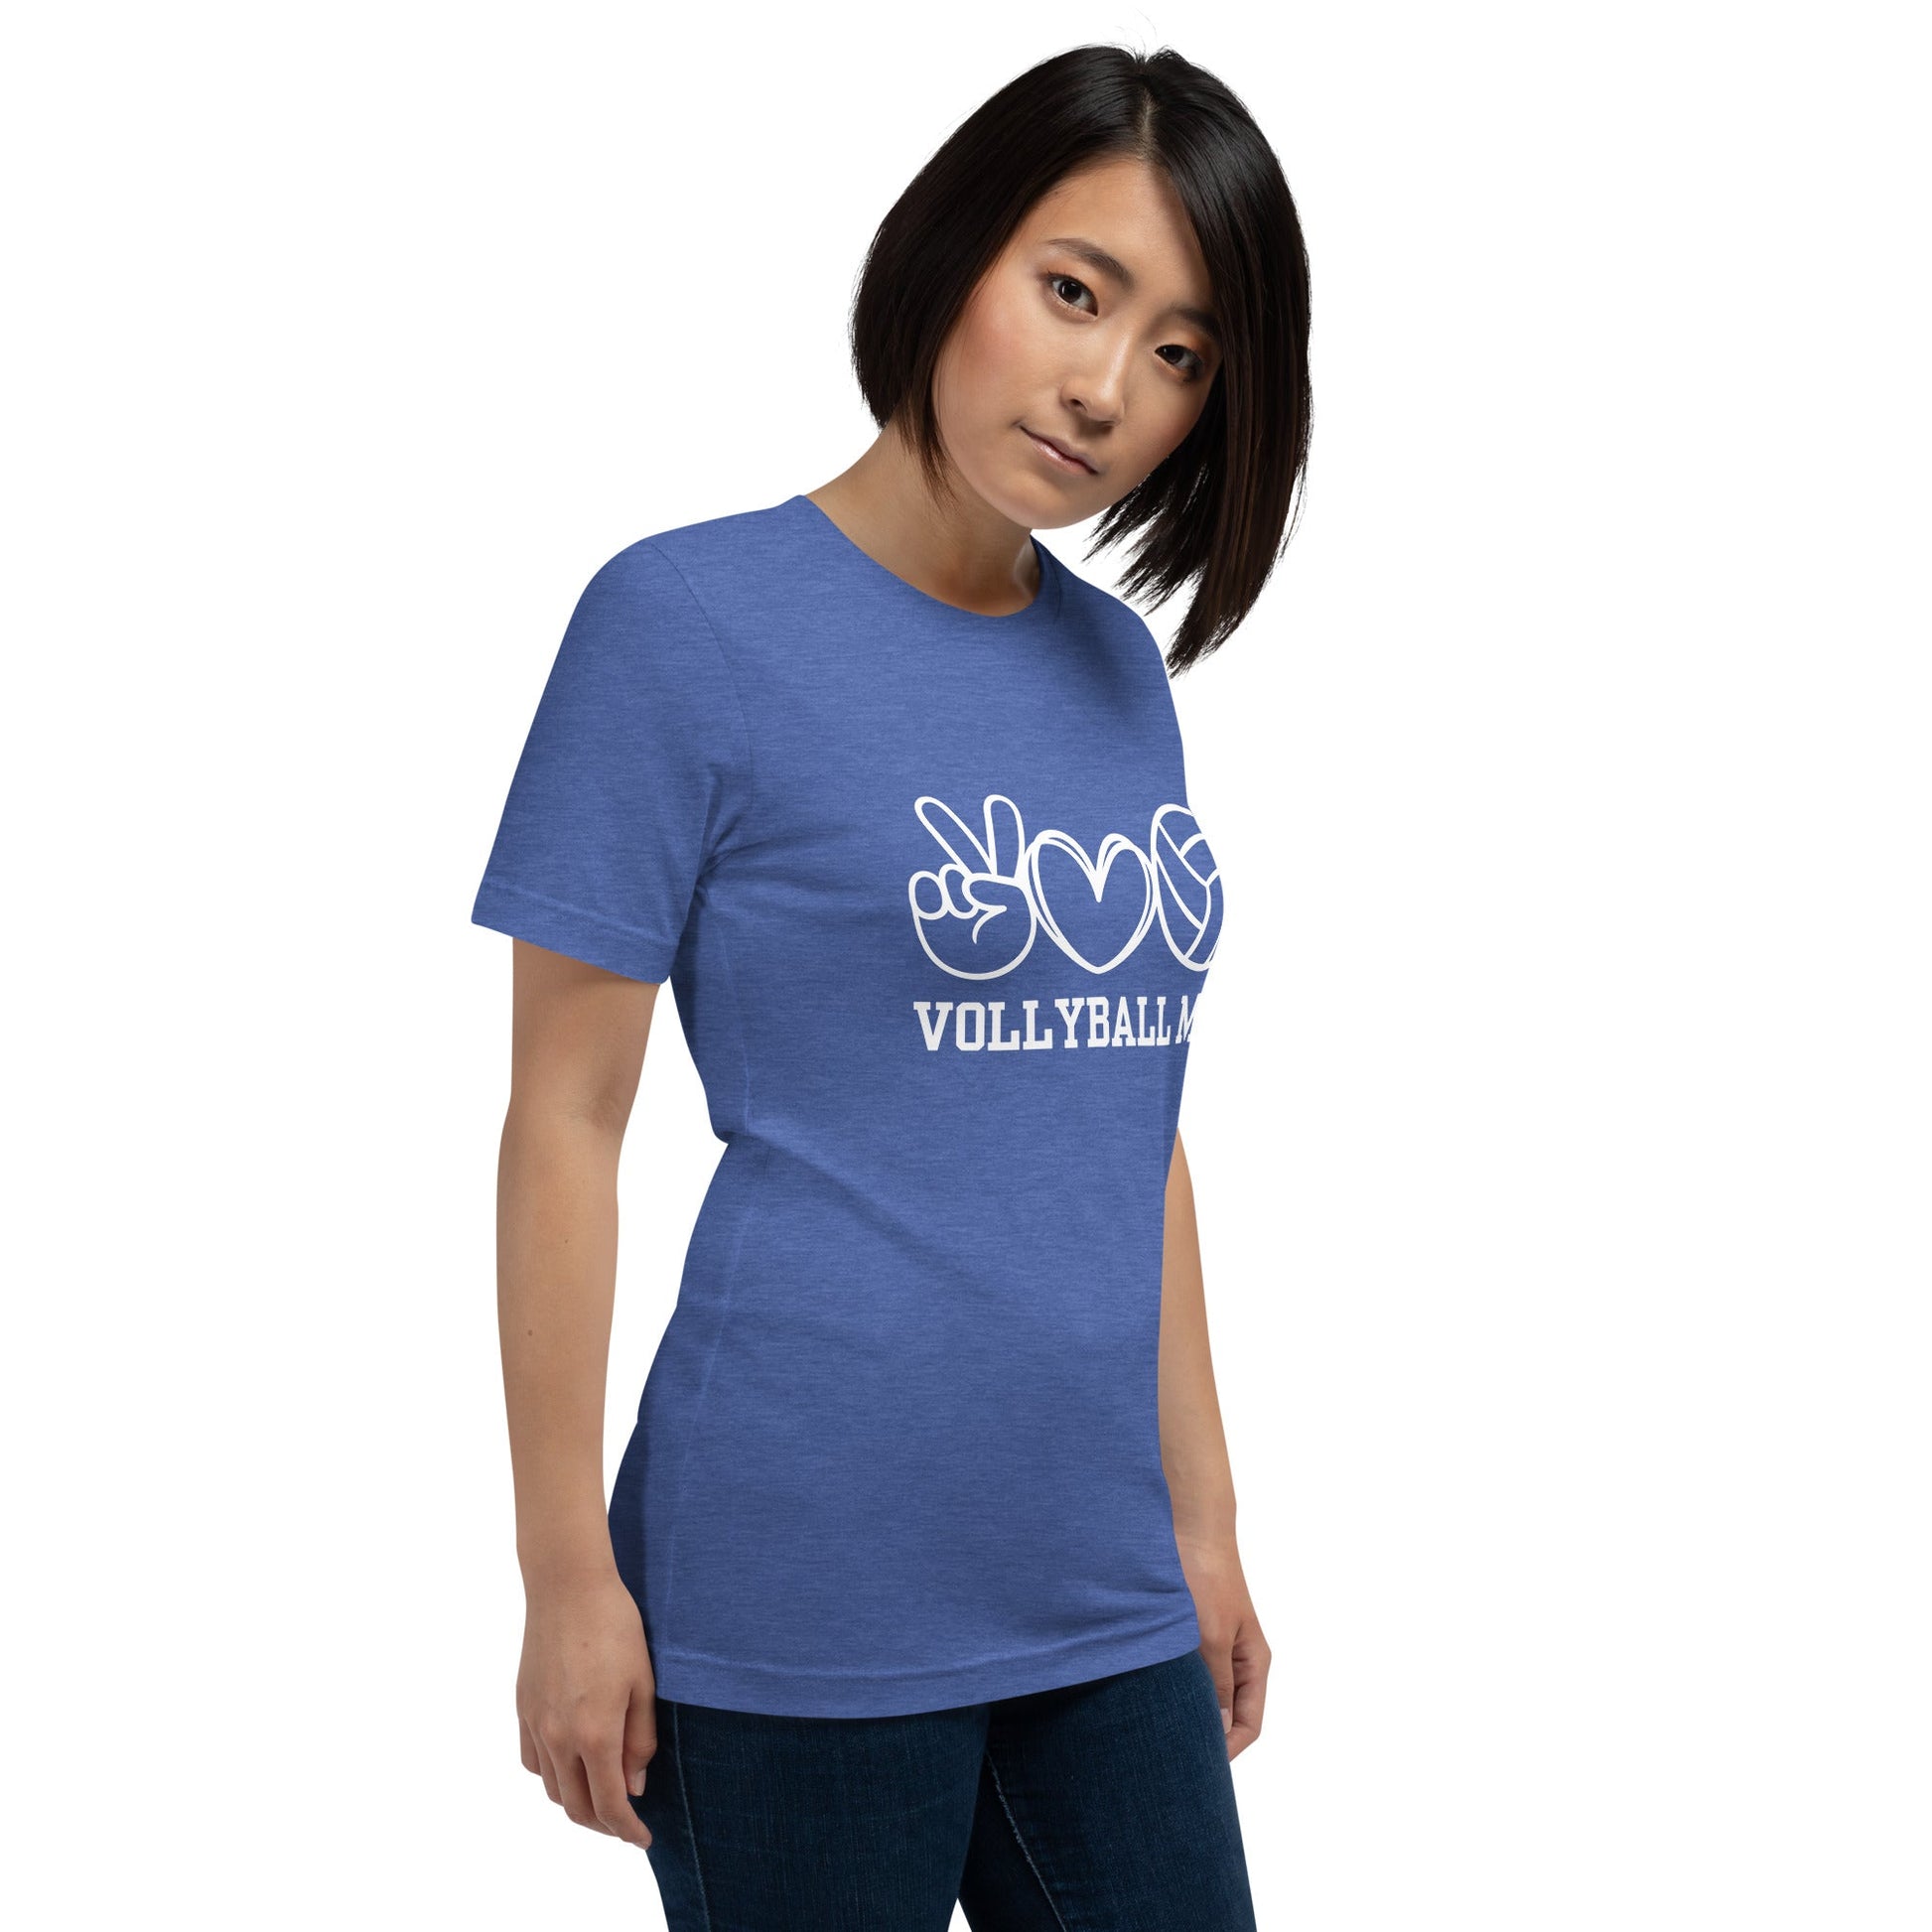 Volleyball Mom | Unisex t - shirt